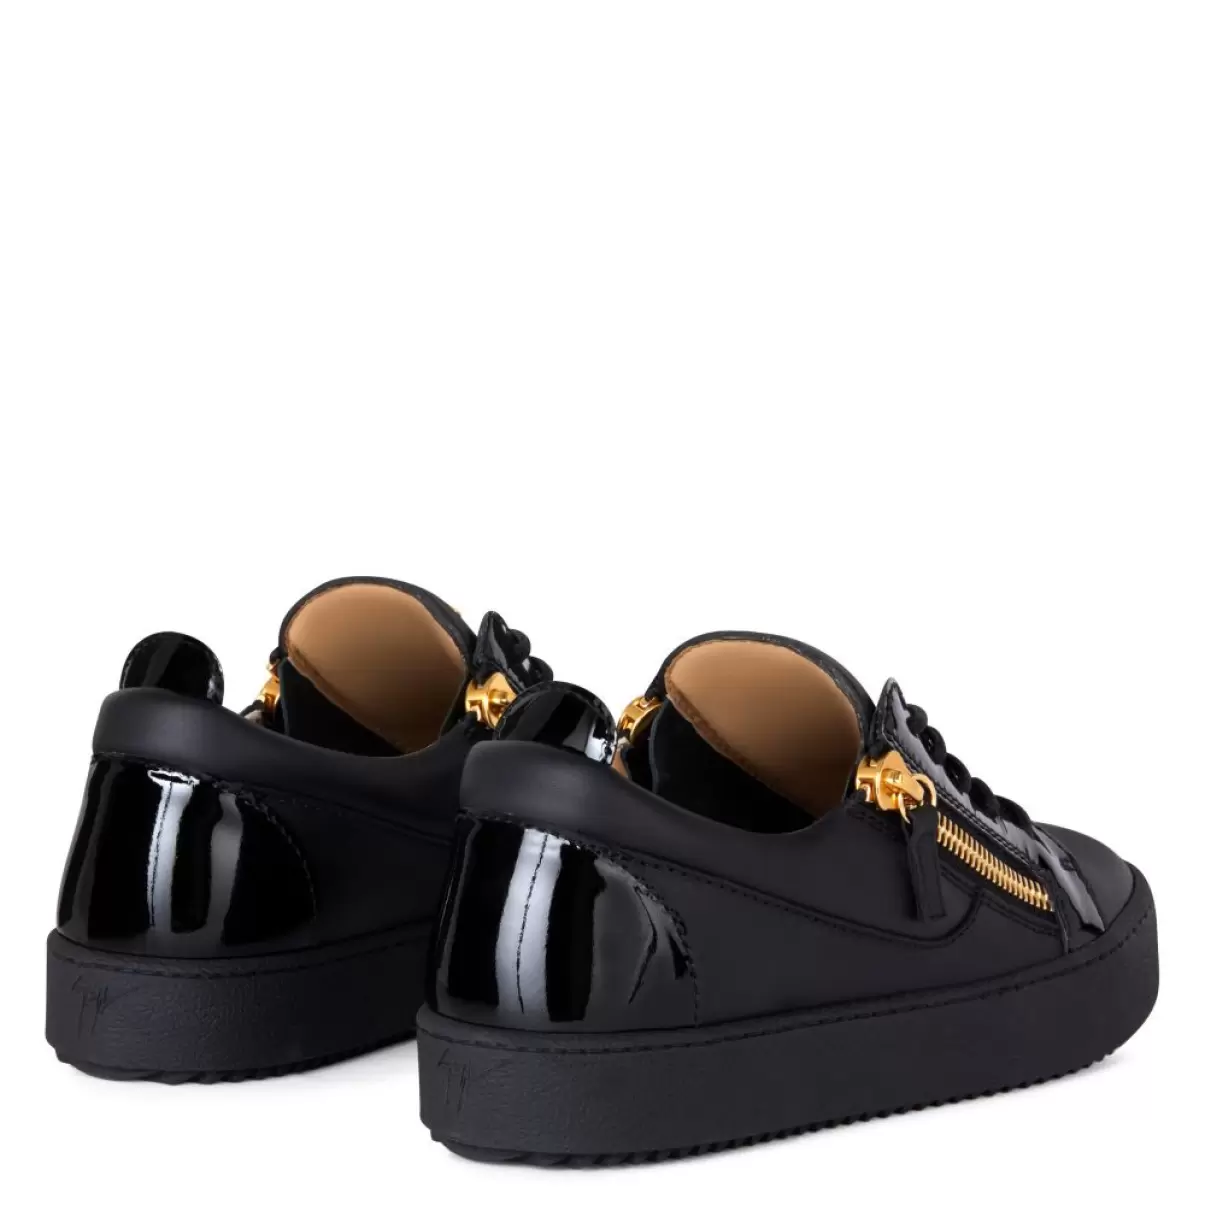 Mujer Negro Giuseppe Zanotti Zapatillas Low Top Sneakers Gail 5679 - 2